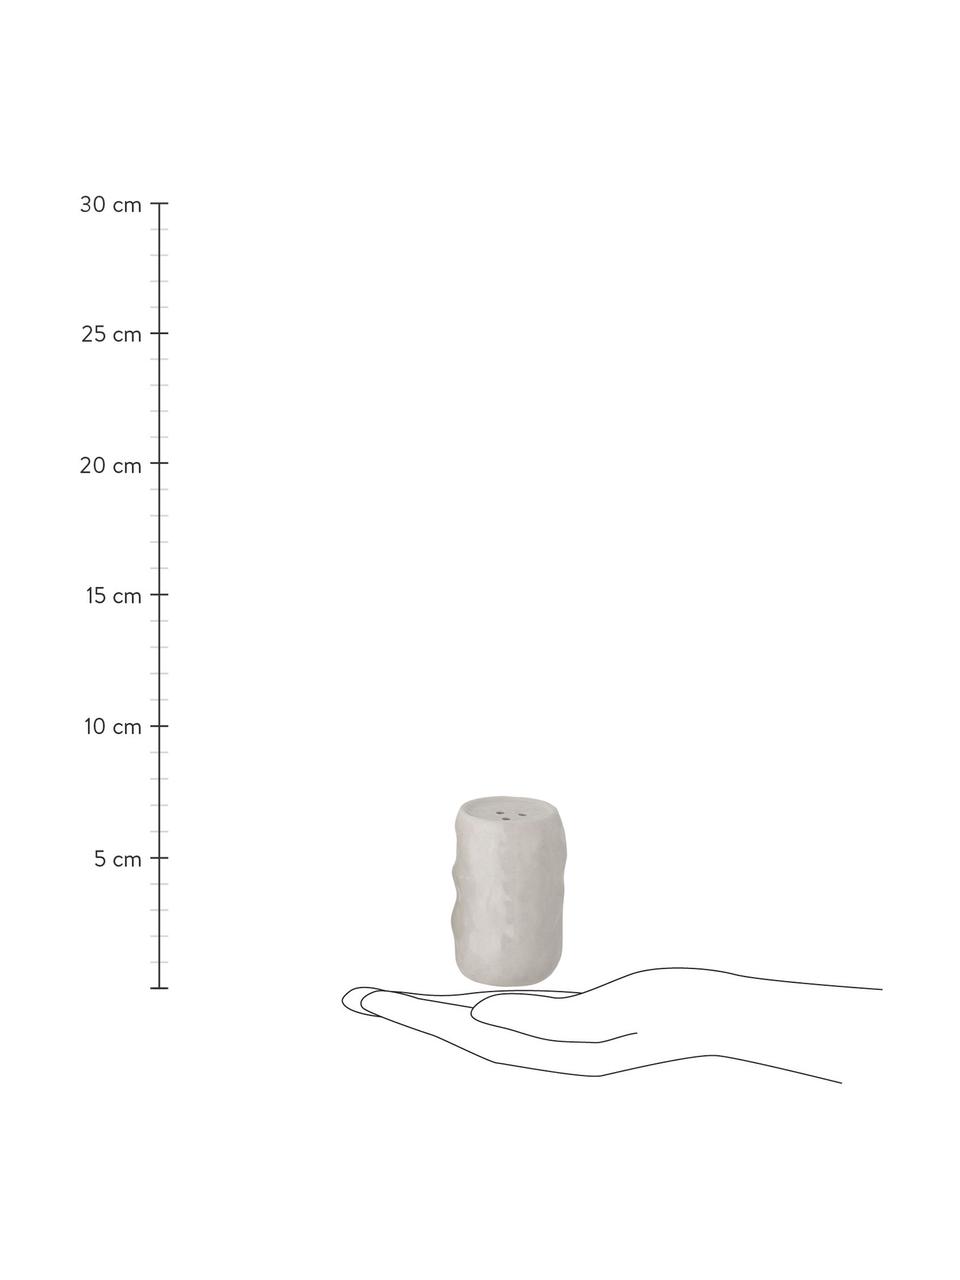 Soľnička a korenička z kameniny Tinde, Kamenina, Biela, Ø 4 x V 7 cm